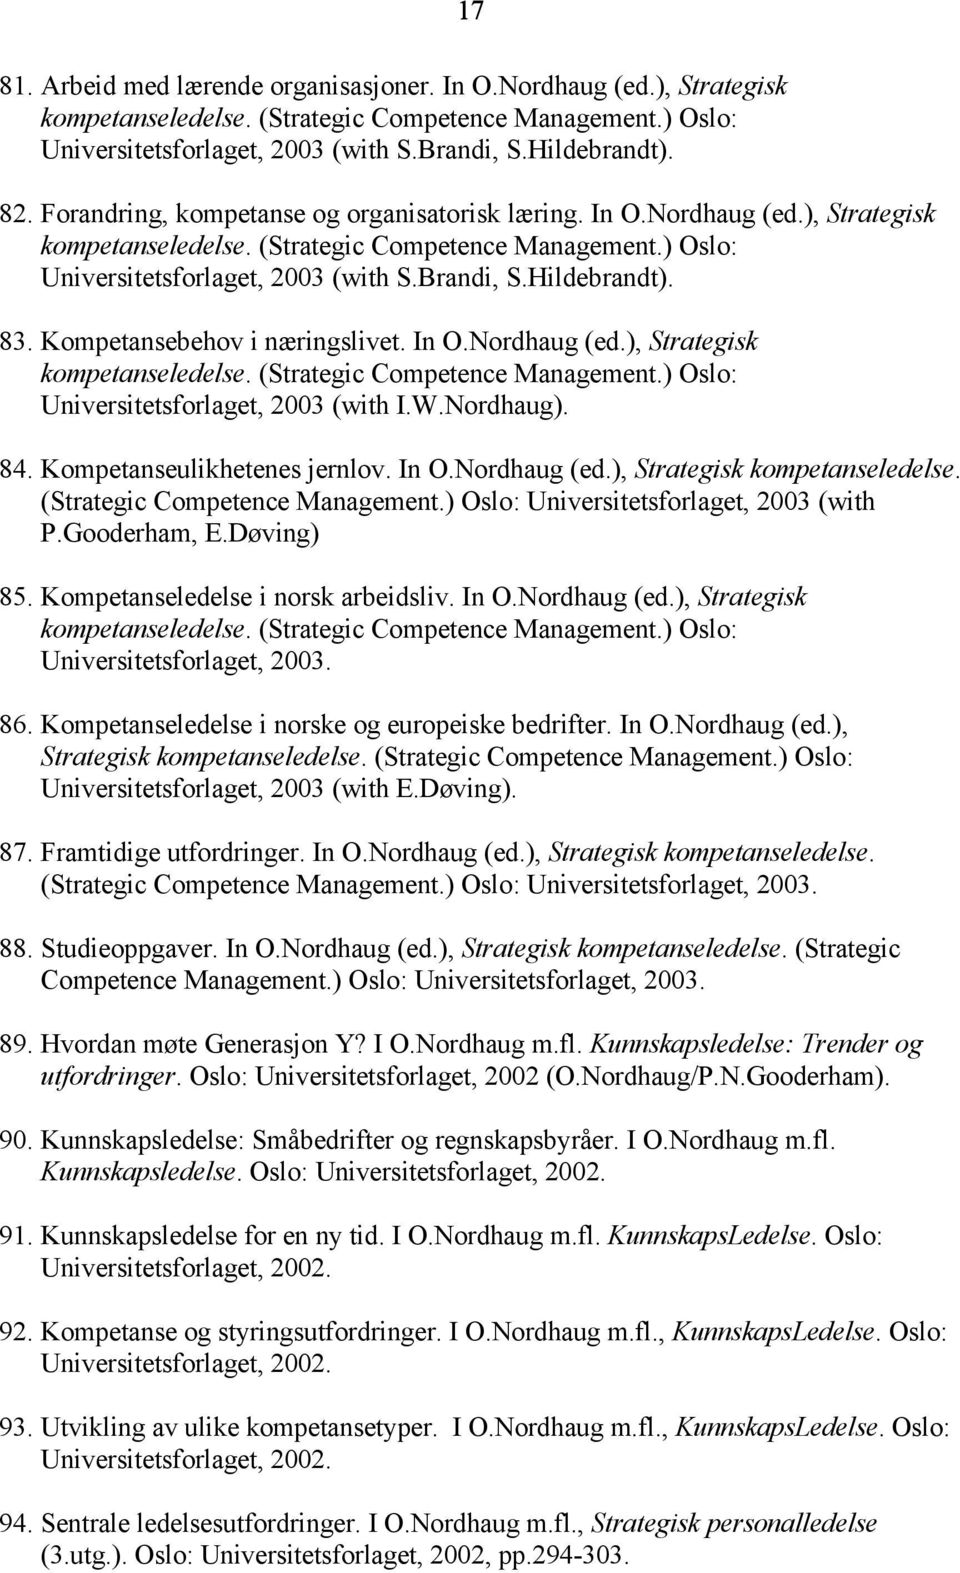 83. Kompetansebehov i næringslivet. In O.Nordhaug (ed.), Strategisk kompetanseledelse. (Strategic Competence Management.) Oslo: Universitetsforlaget, 2003 (with I.W.Nordhaug). 84.